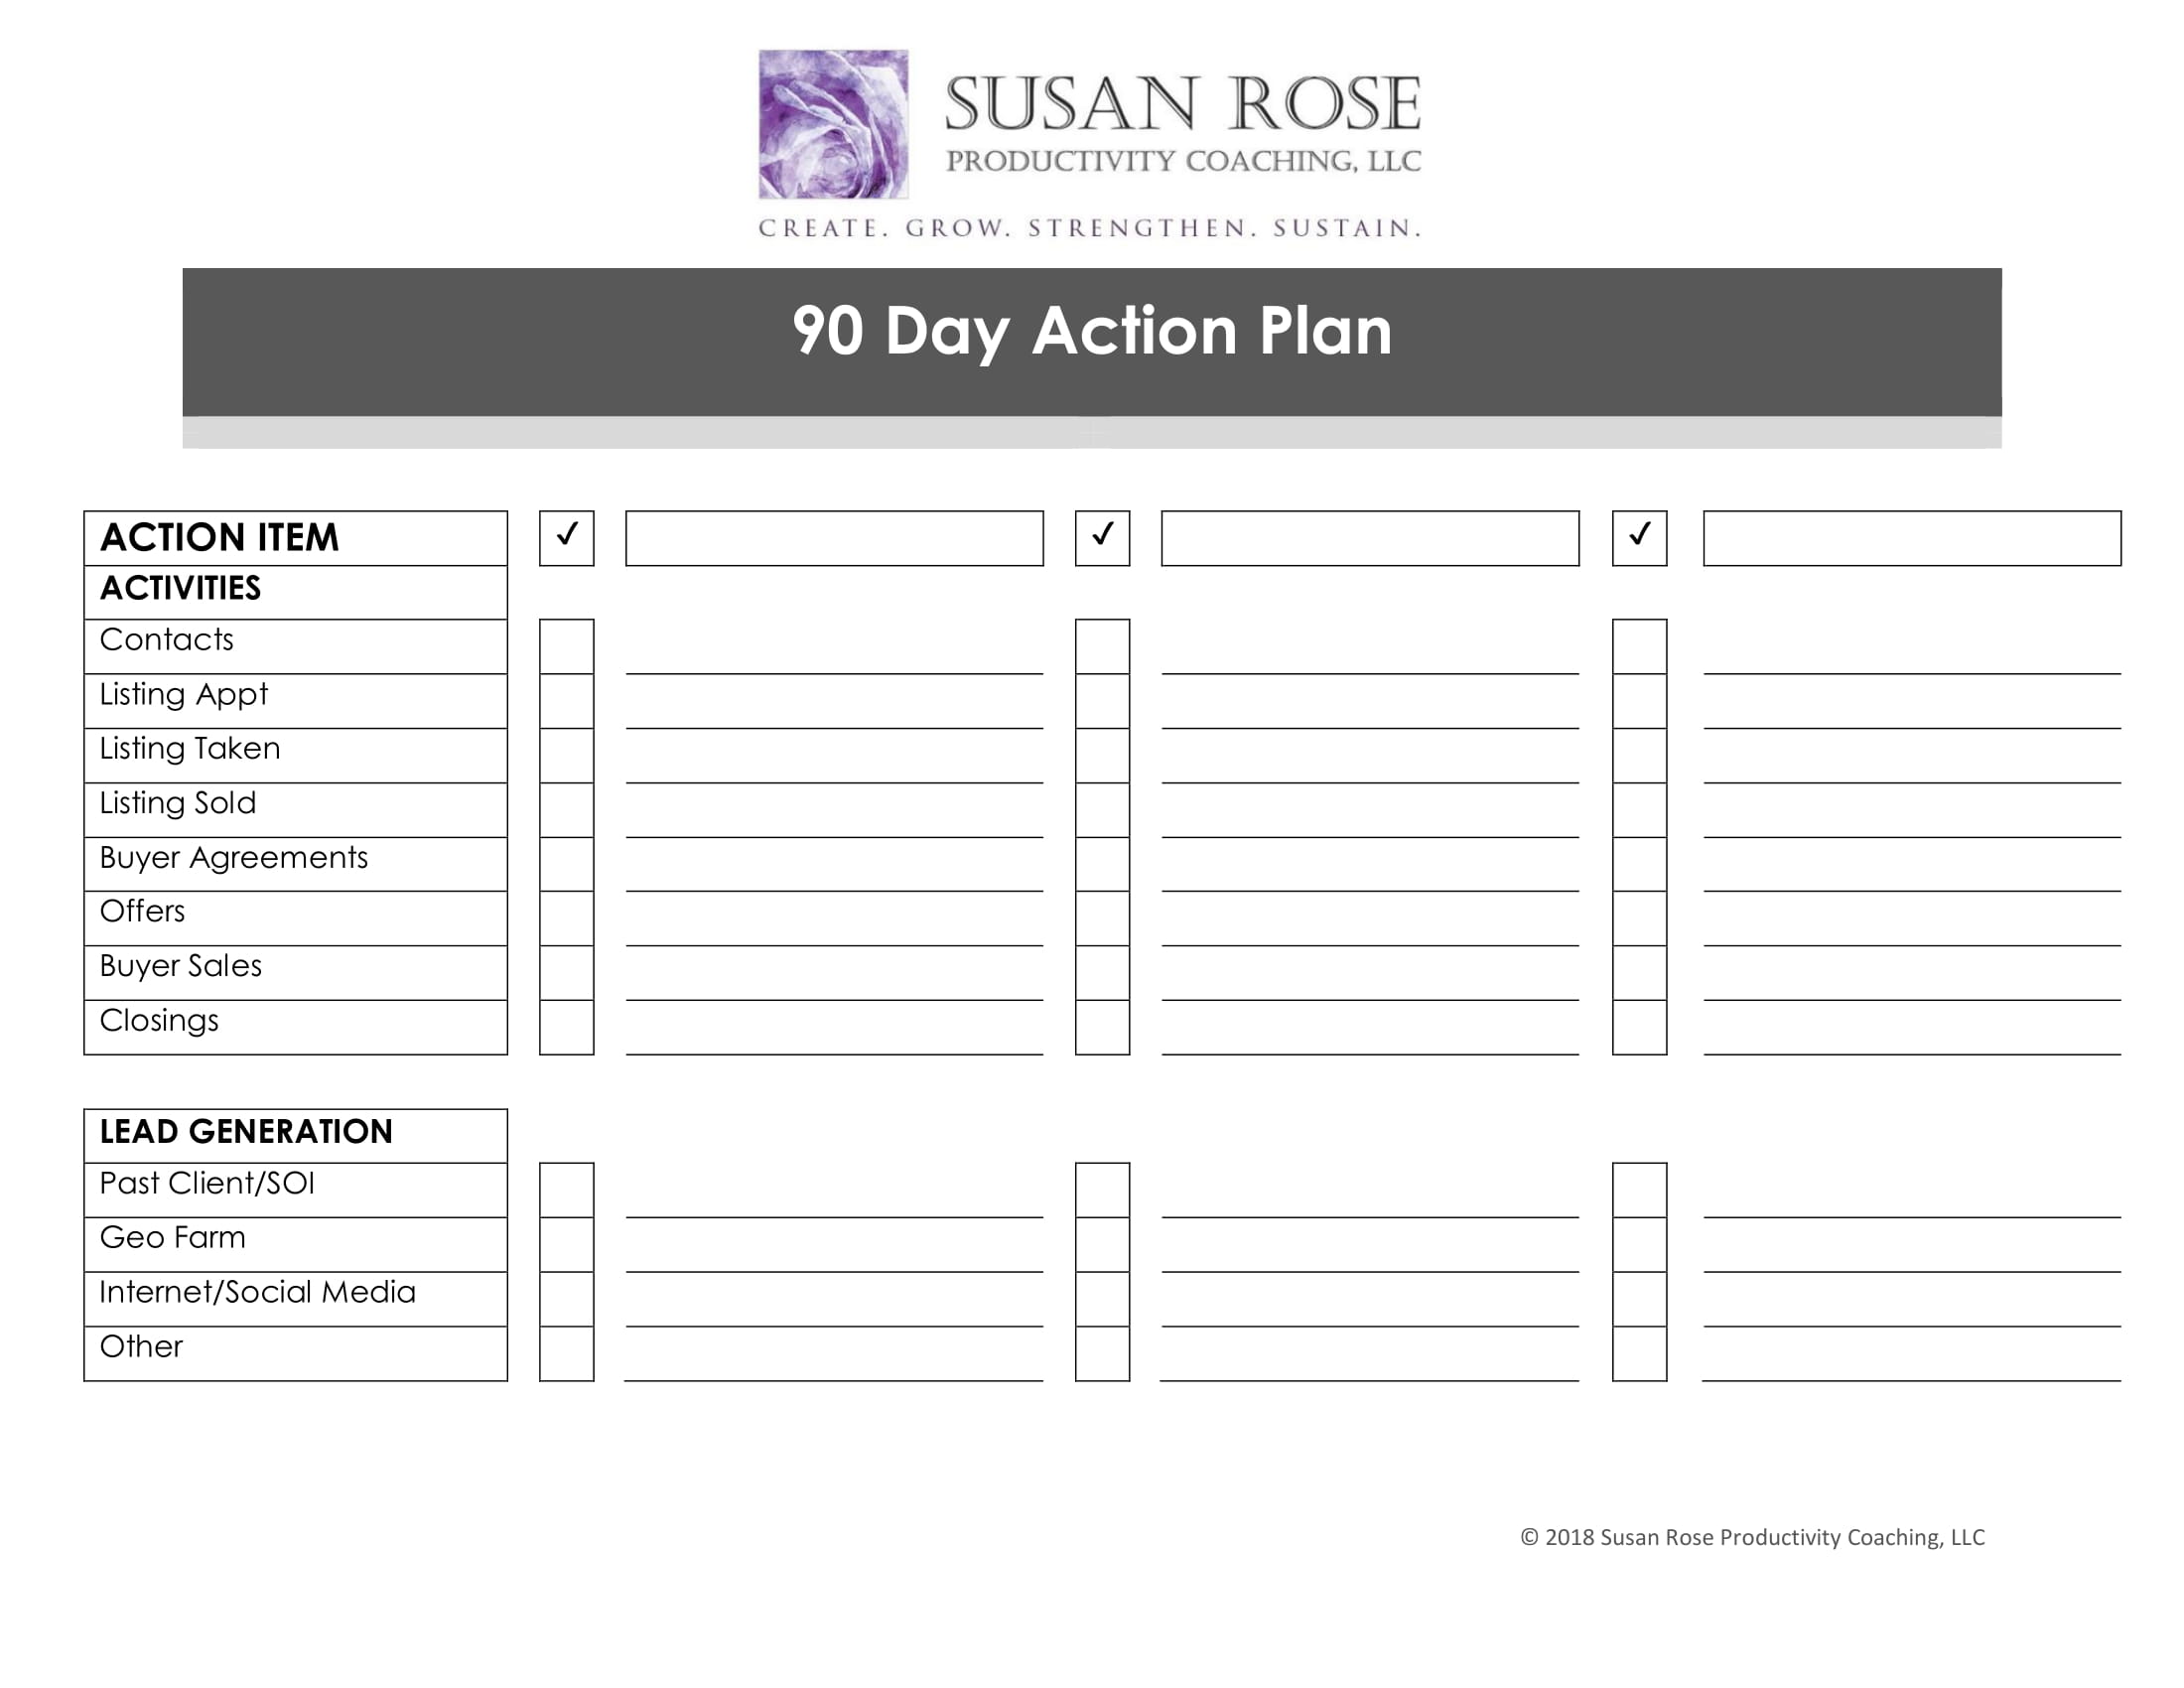 susan rose 90 day action plan example